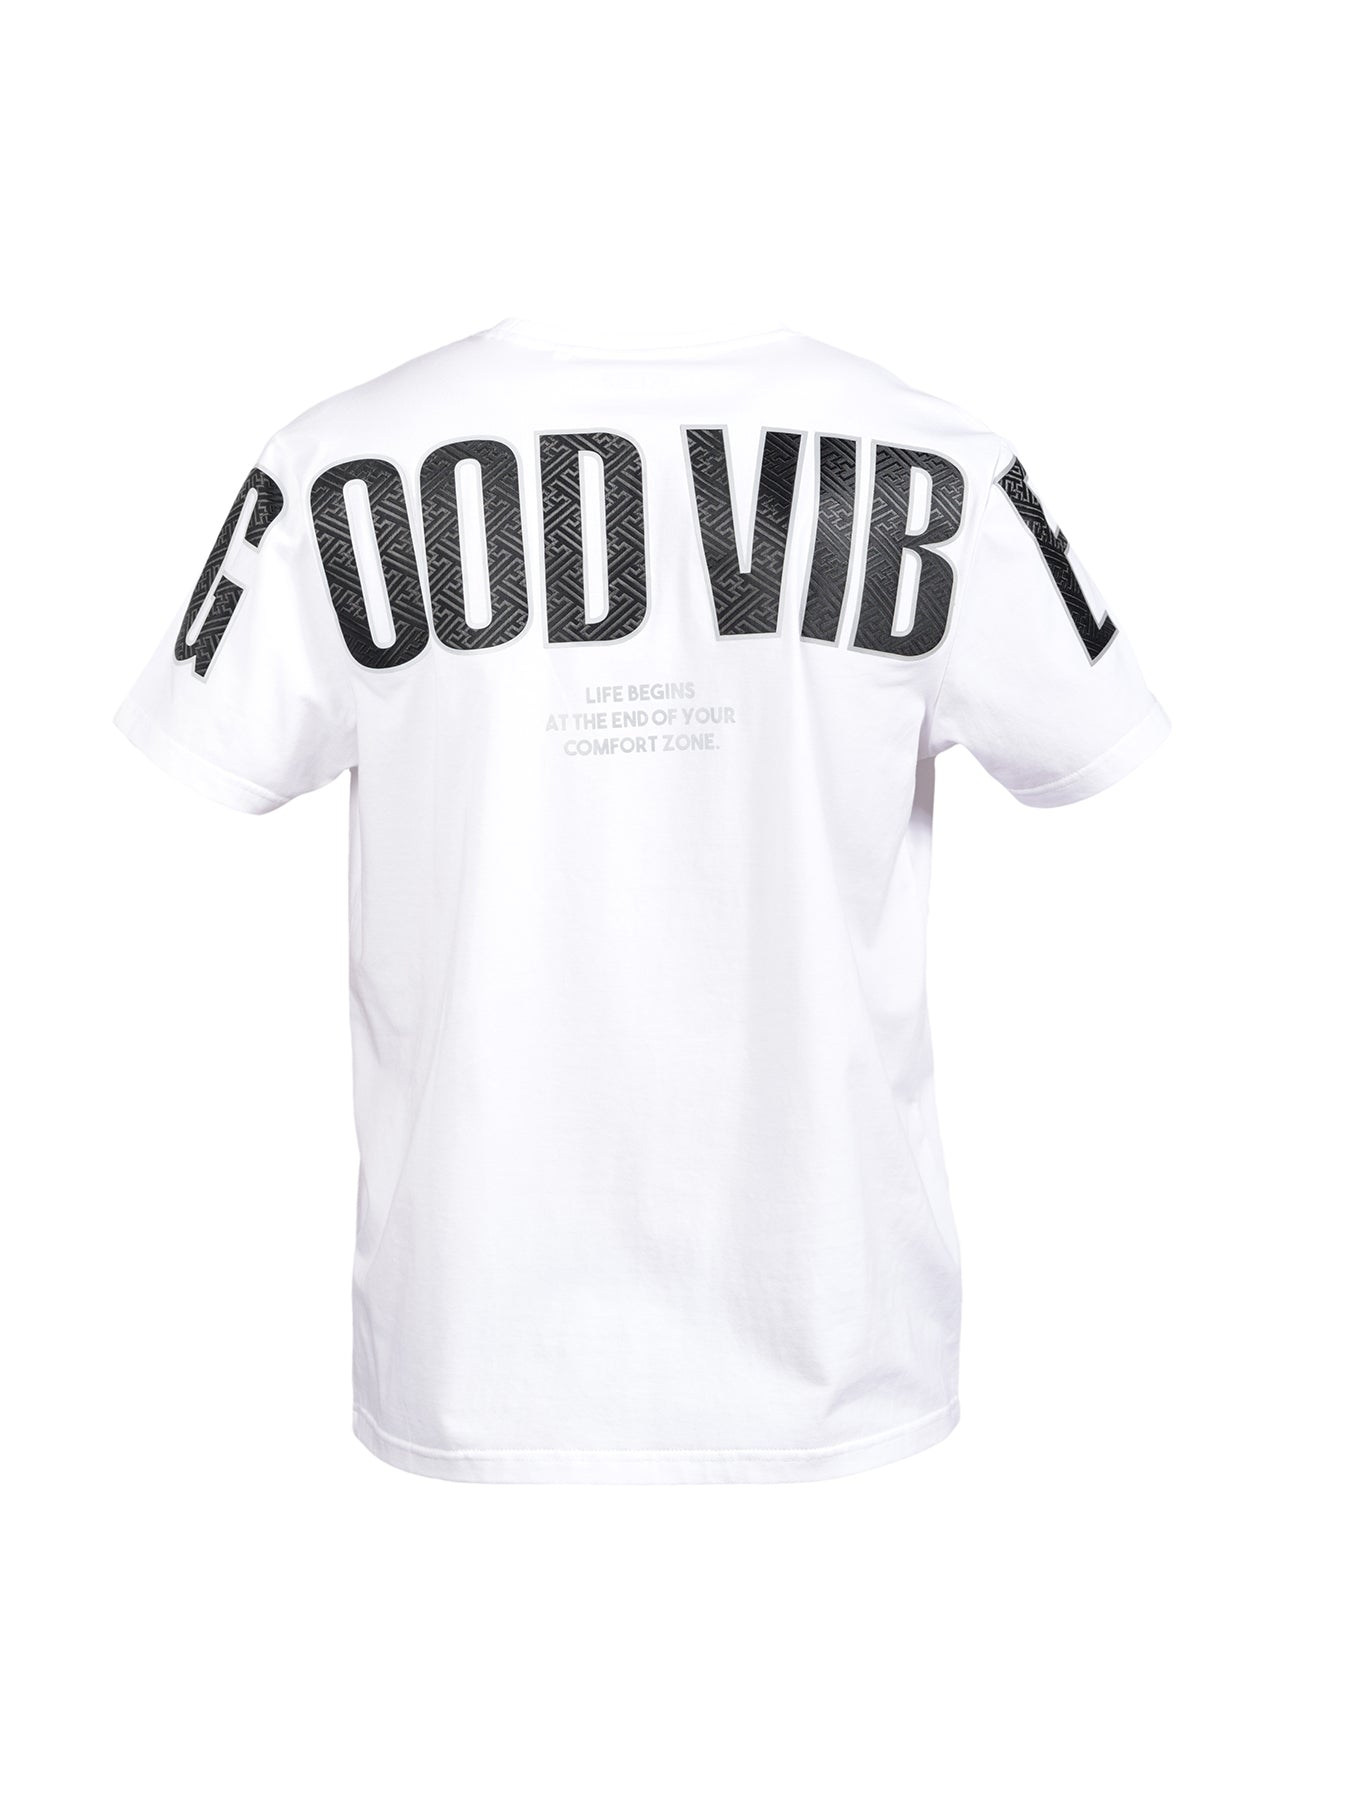 "Good Vibe" Graphic Tee